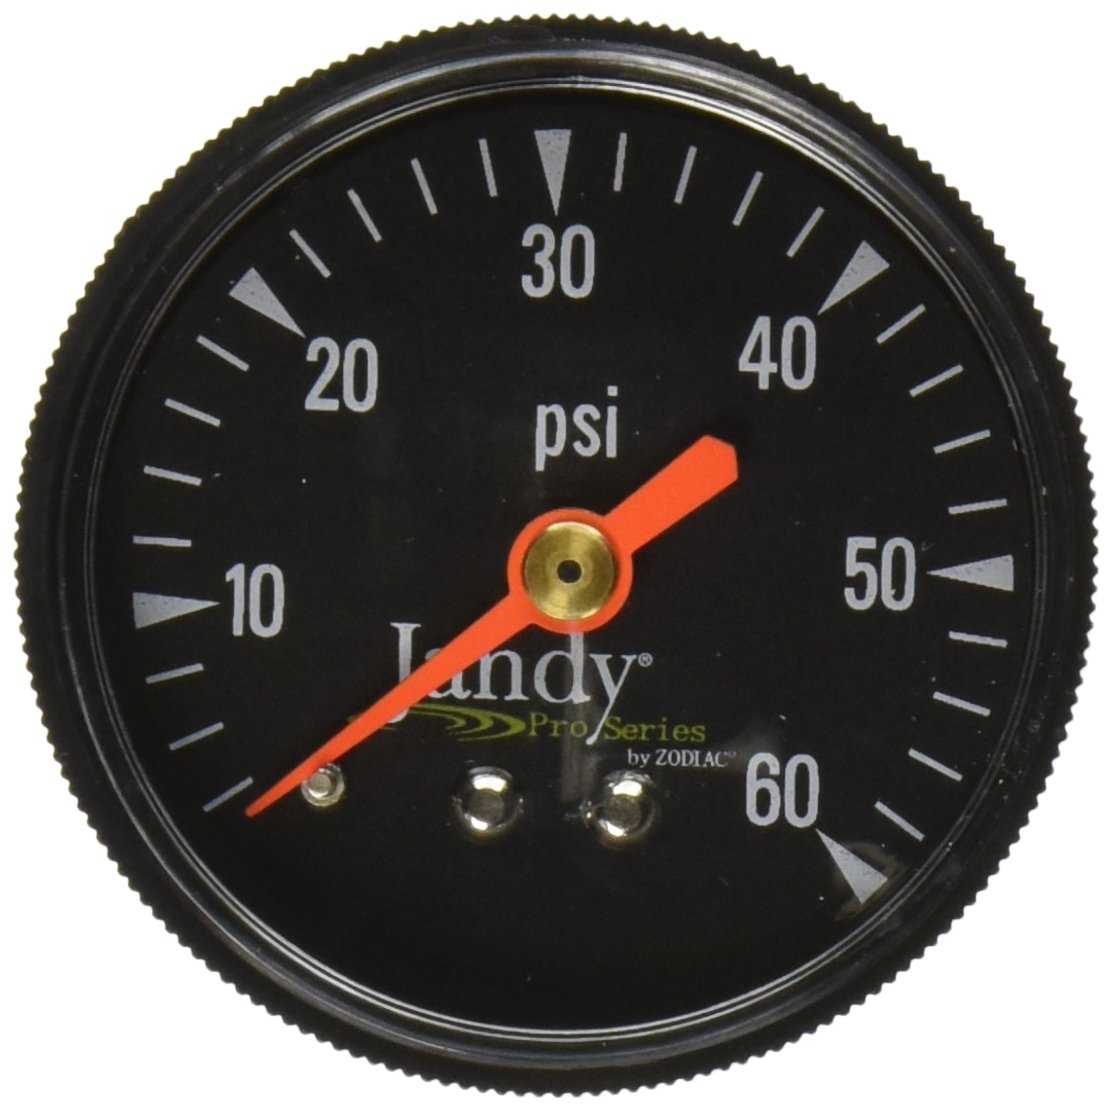 Zodiac Systems | Jandy Pro Series, Jandy CV | CL Pressure Gauge - R0359600